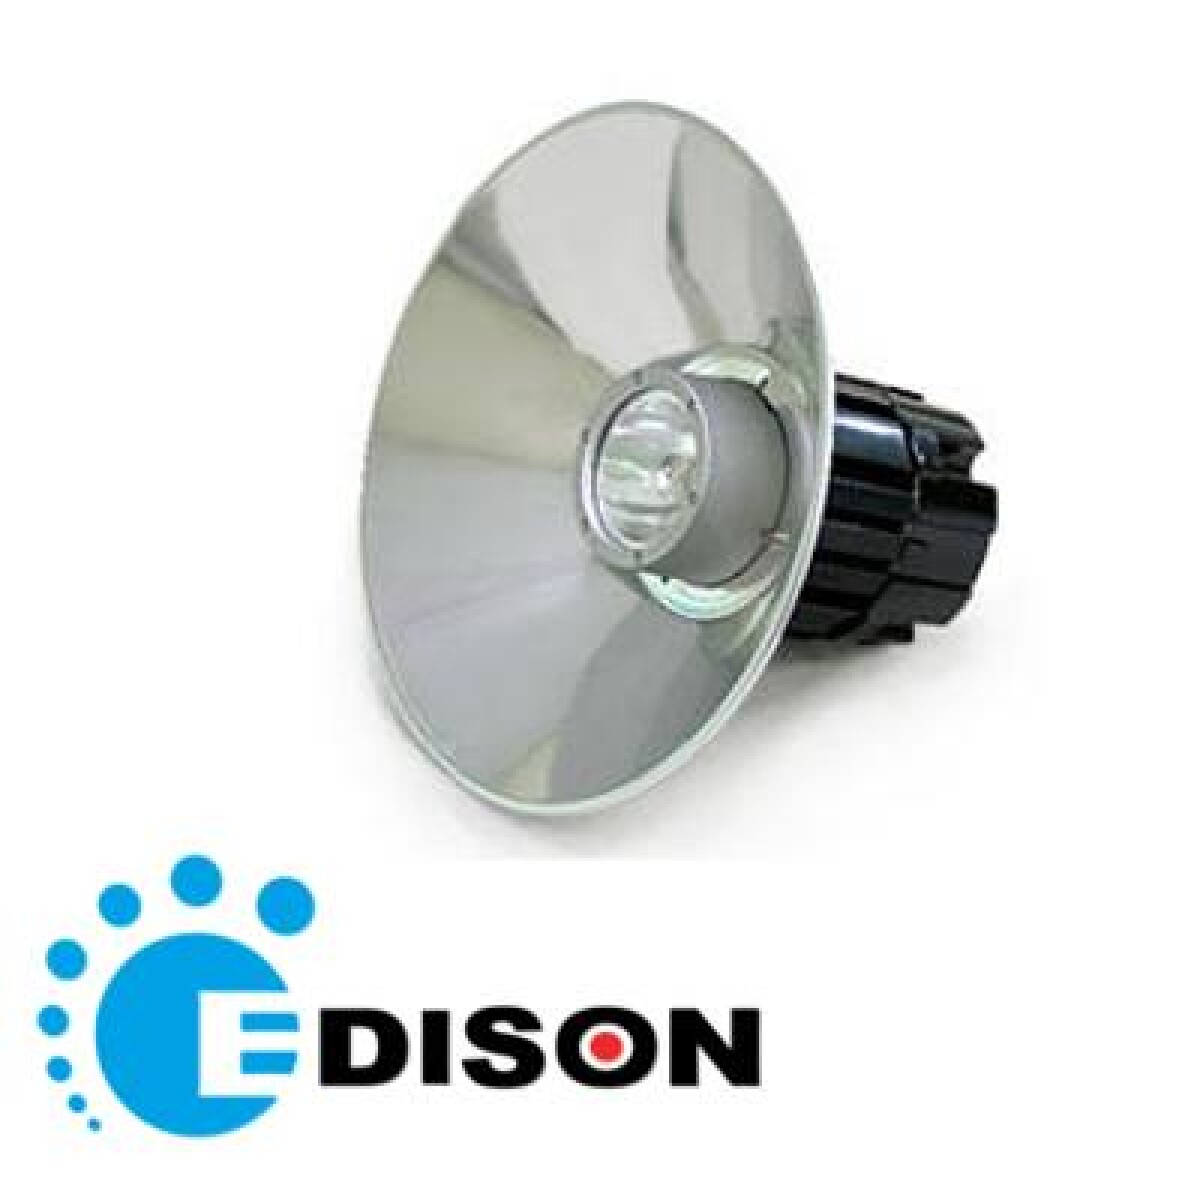 Edison - EBF1H1201- Lampara Led 120W + Reflector. - 001 